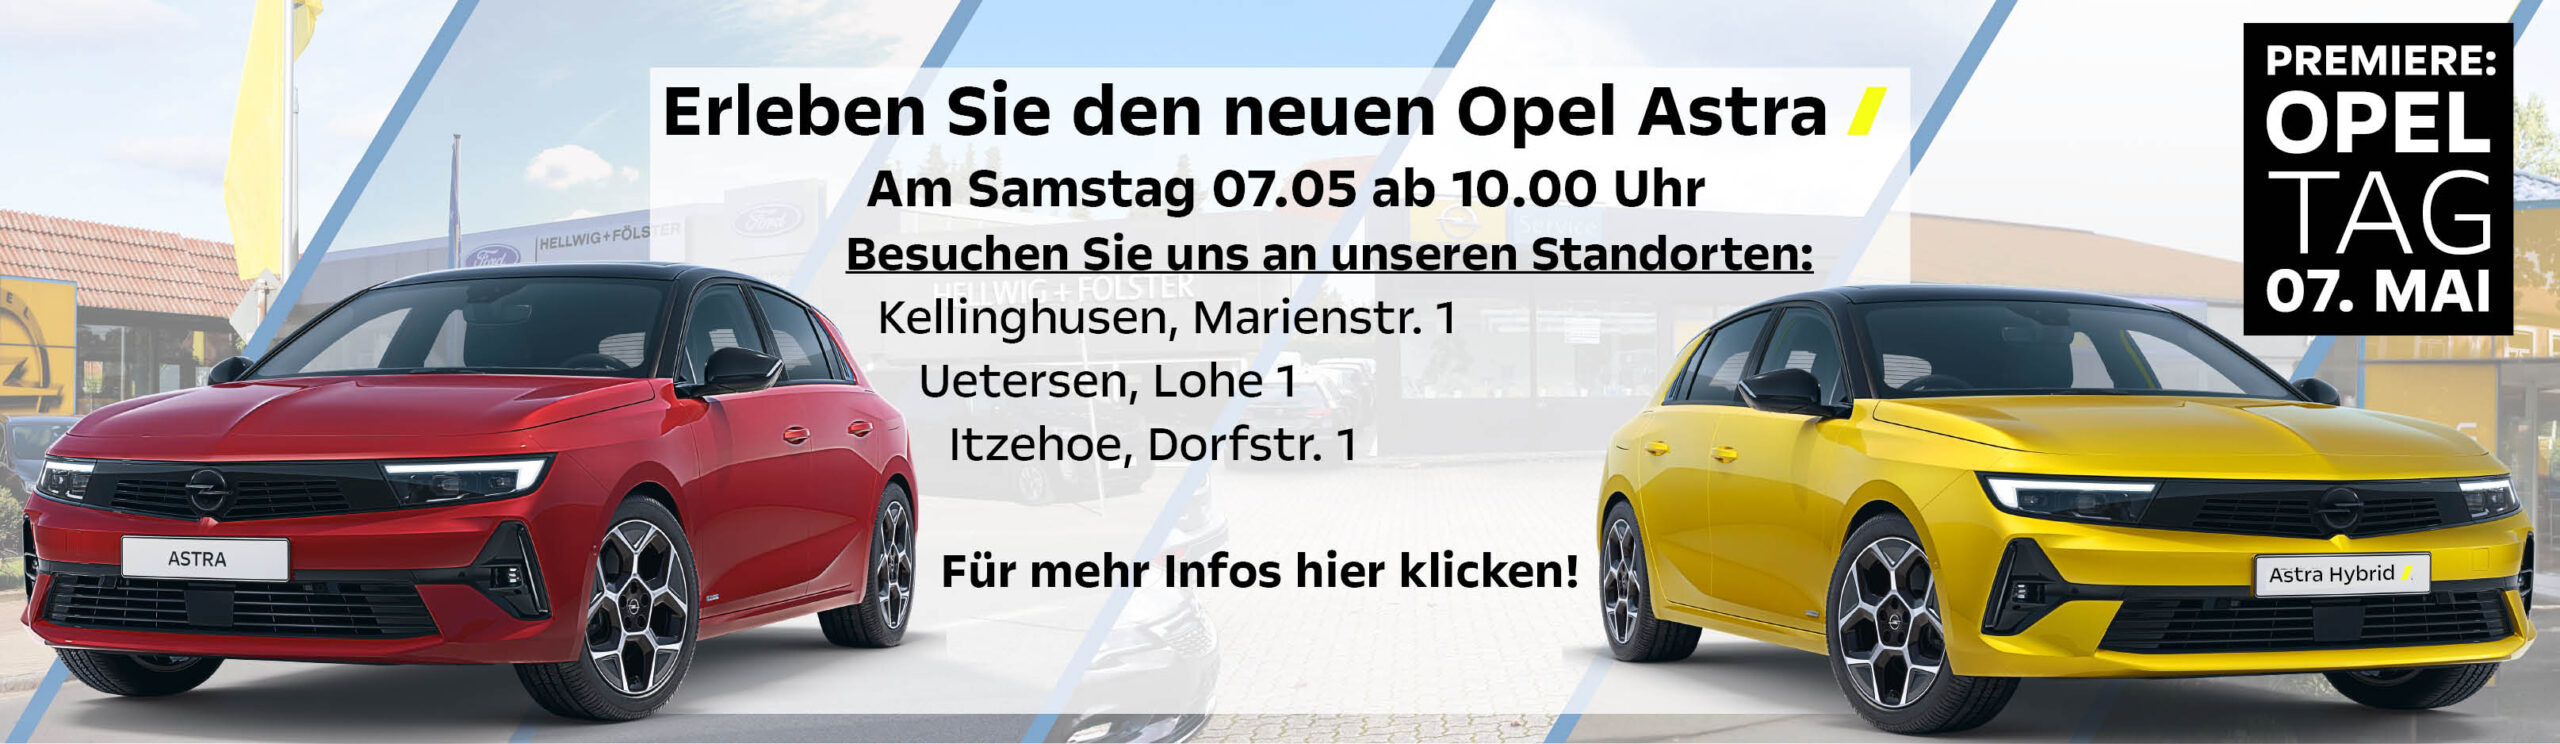 Opel Tag